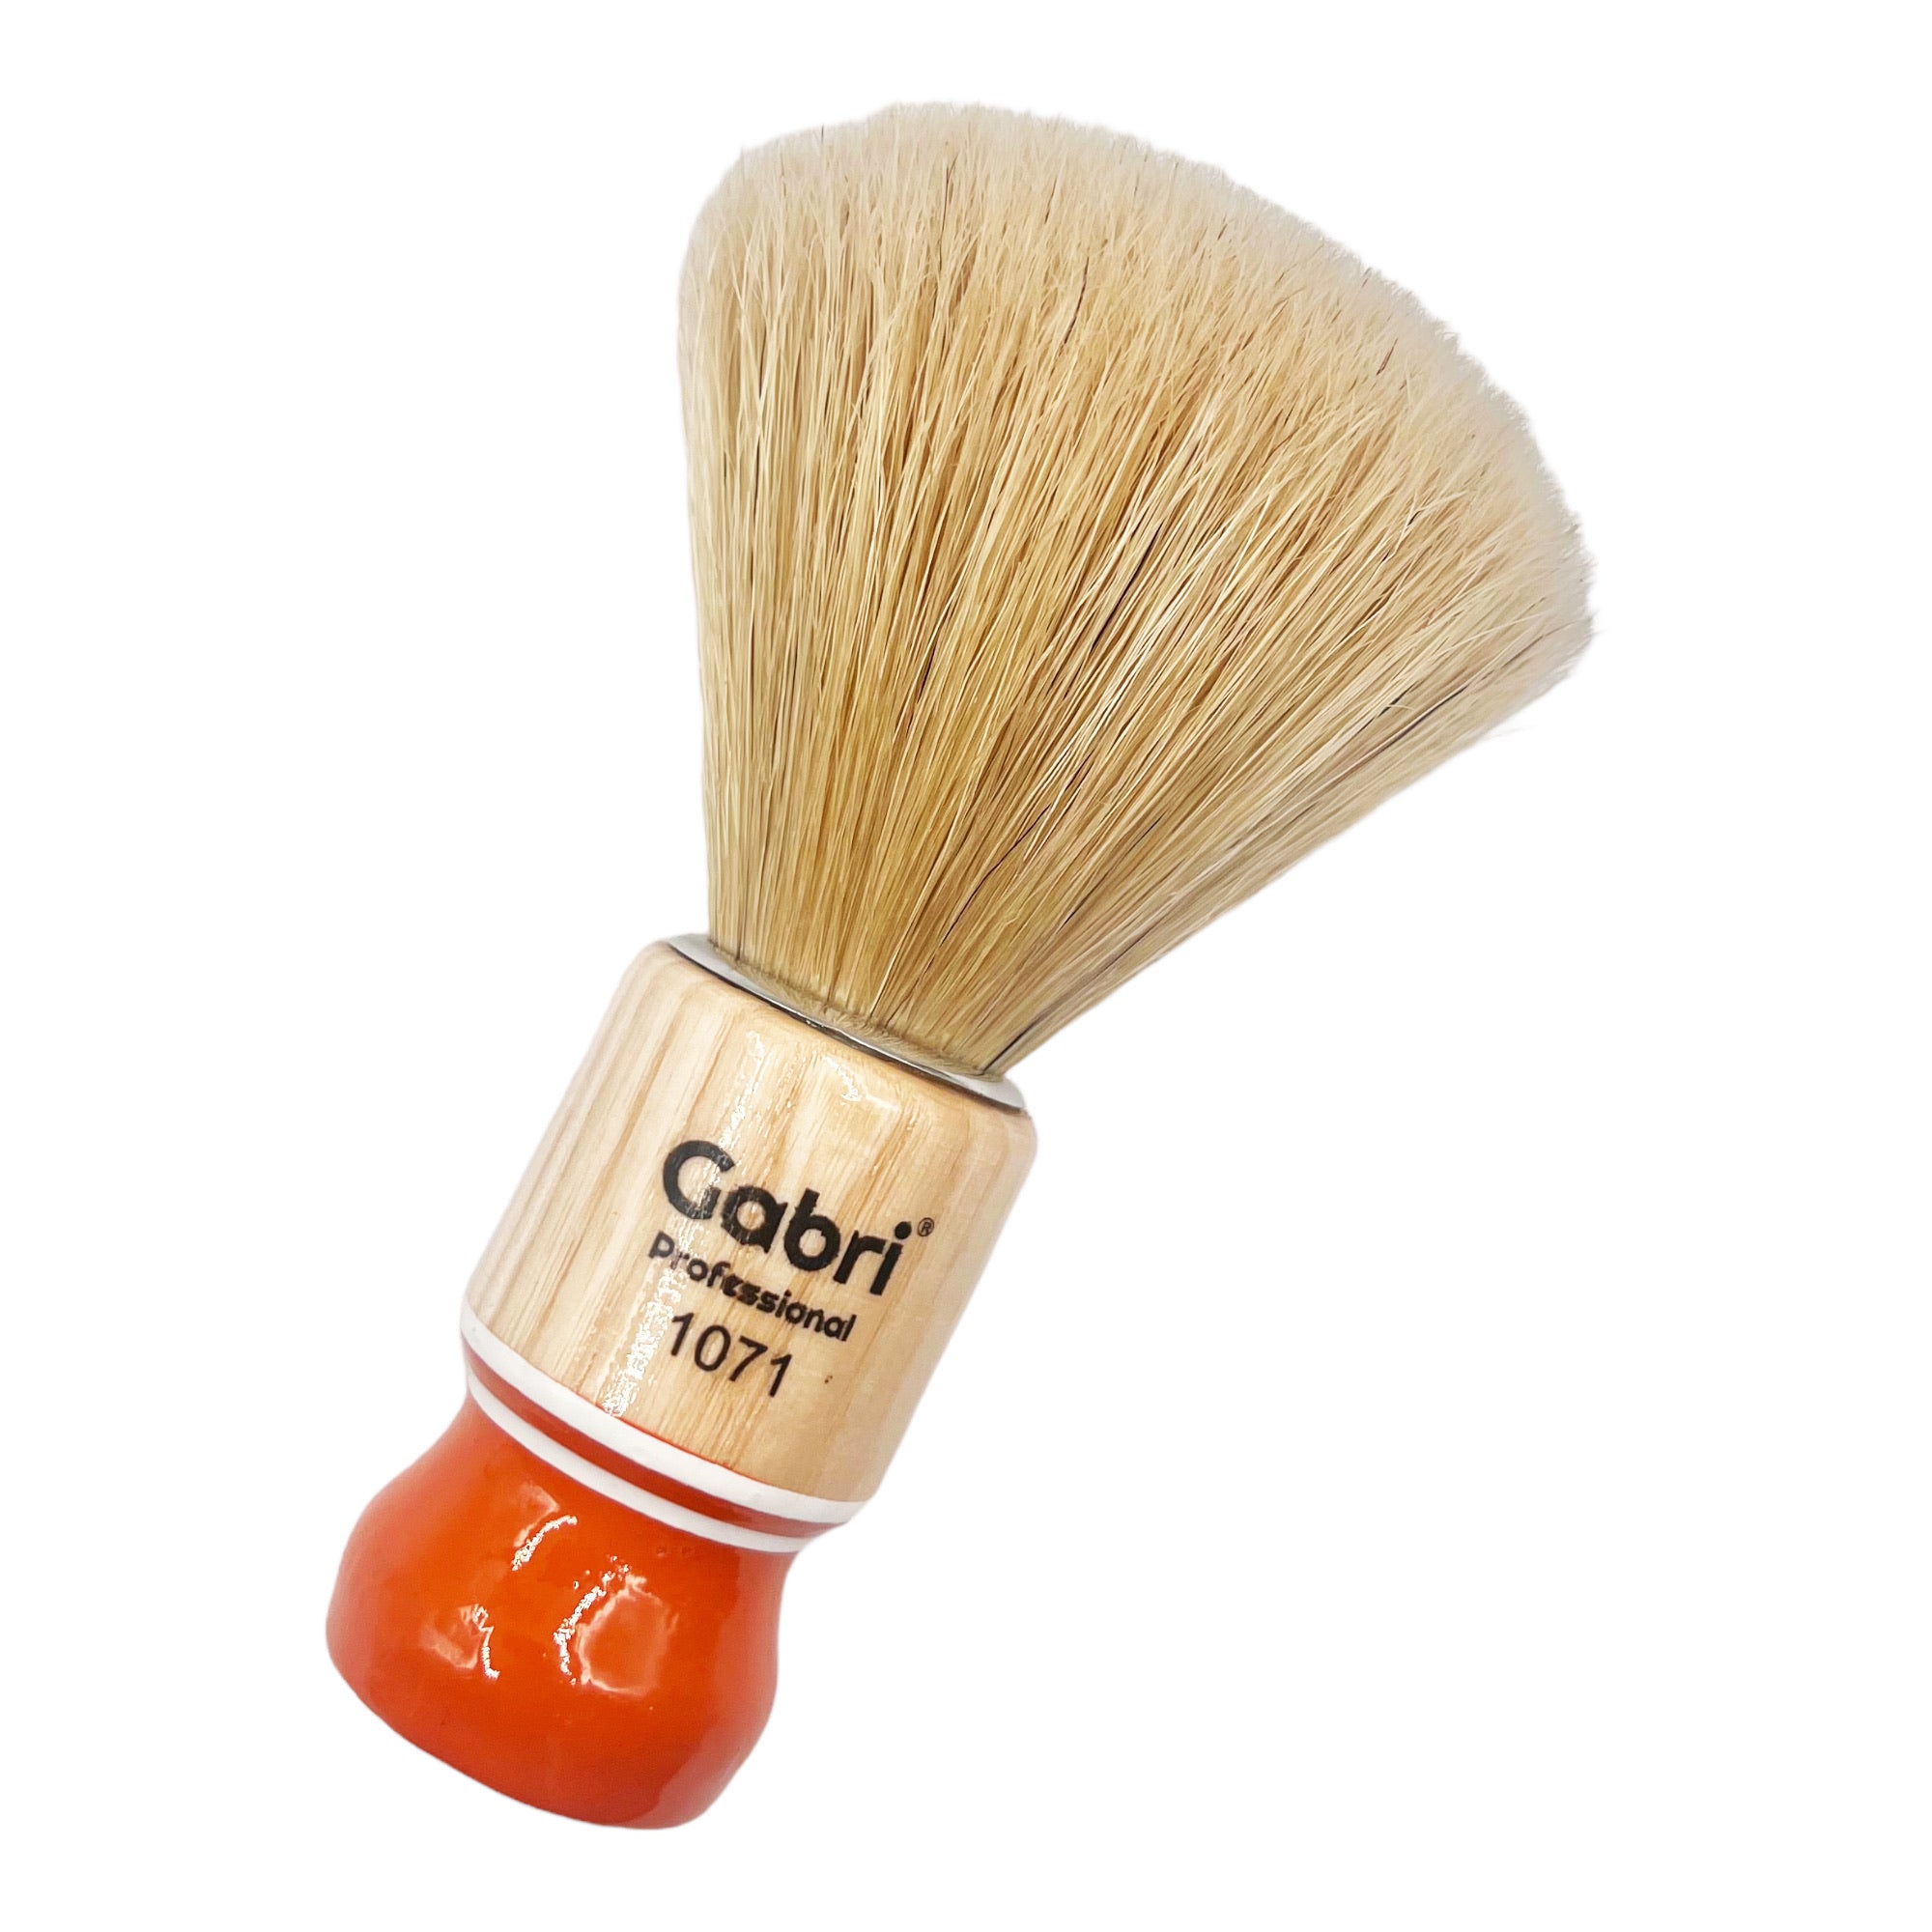 Gabri - Shaving Brush Authentic Wooden Hand Made 1071 (Orange) 13.5cm